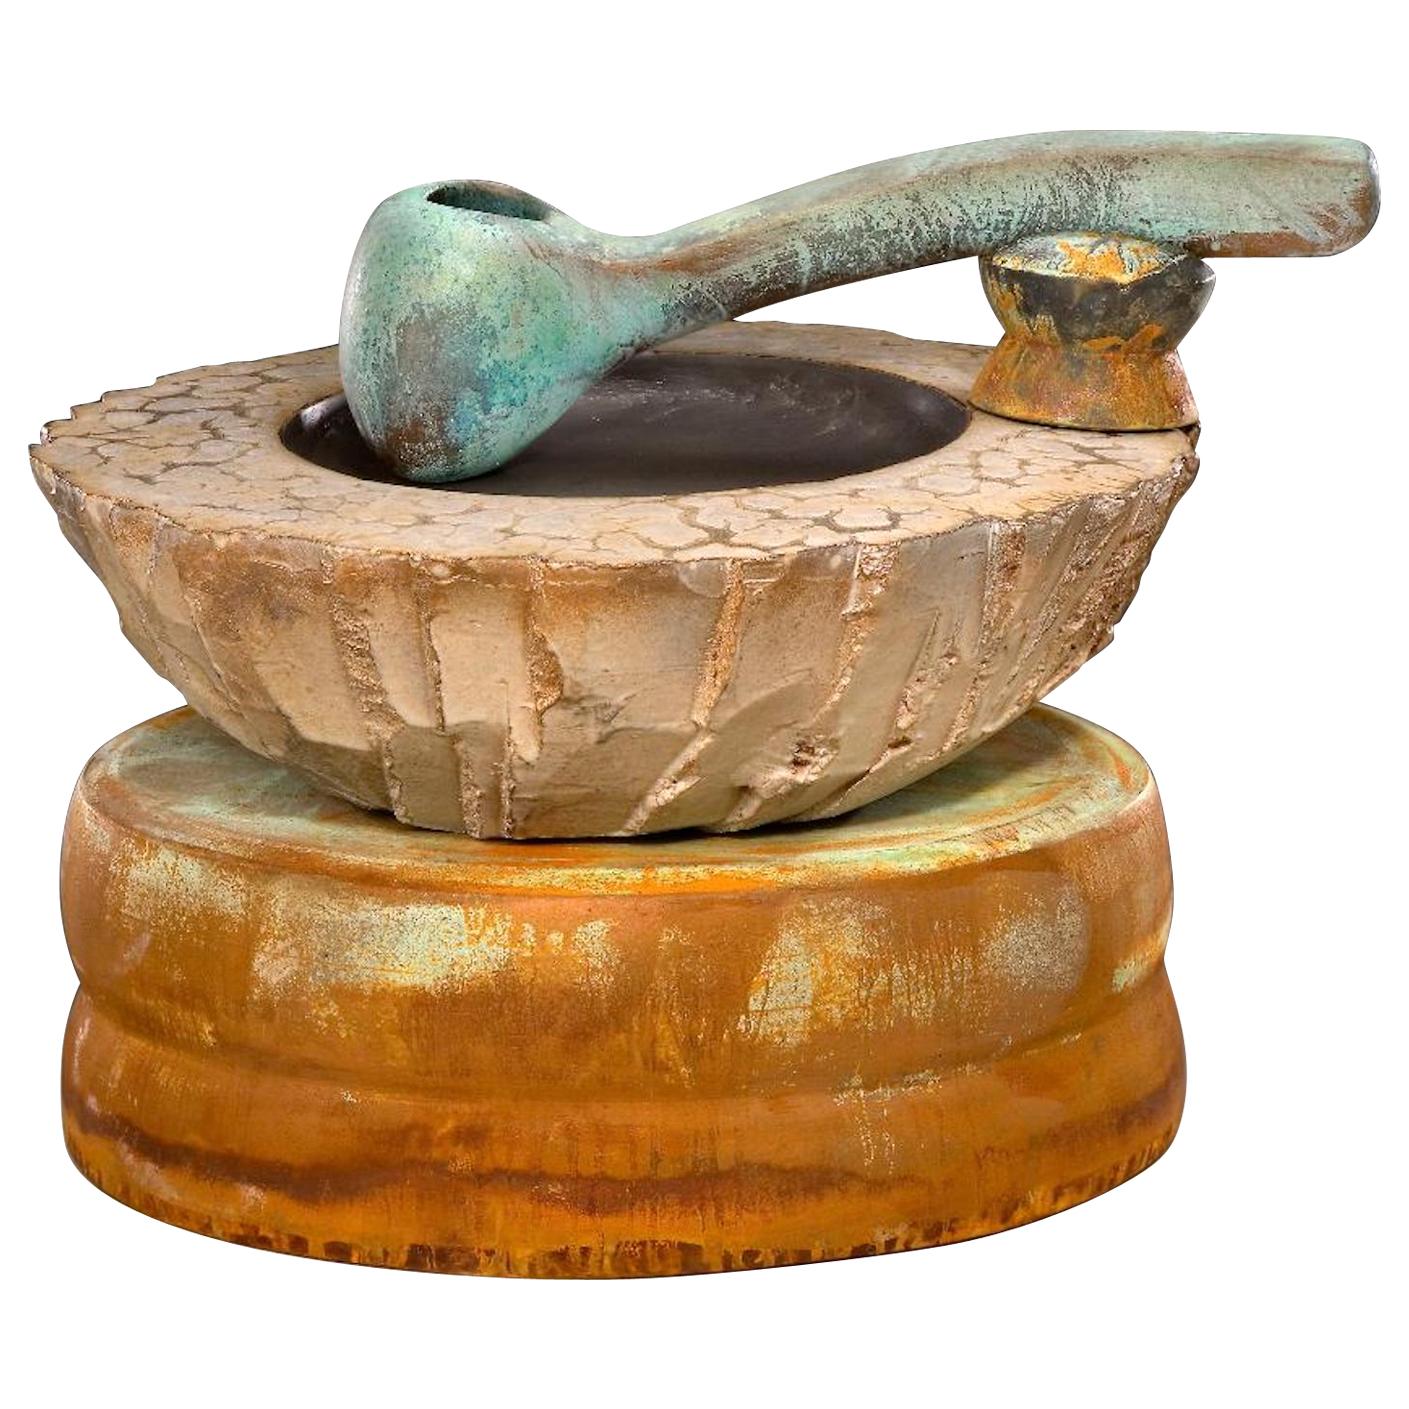 Richard Hirsch Ceramic Altar Bowl with Ladle #3, 2007 For Sale